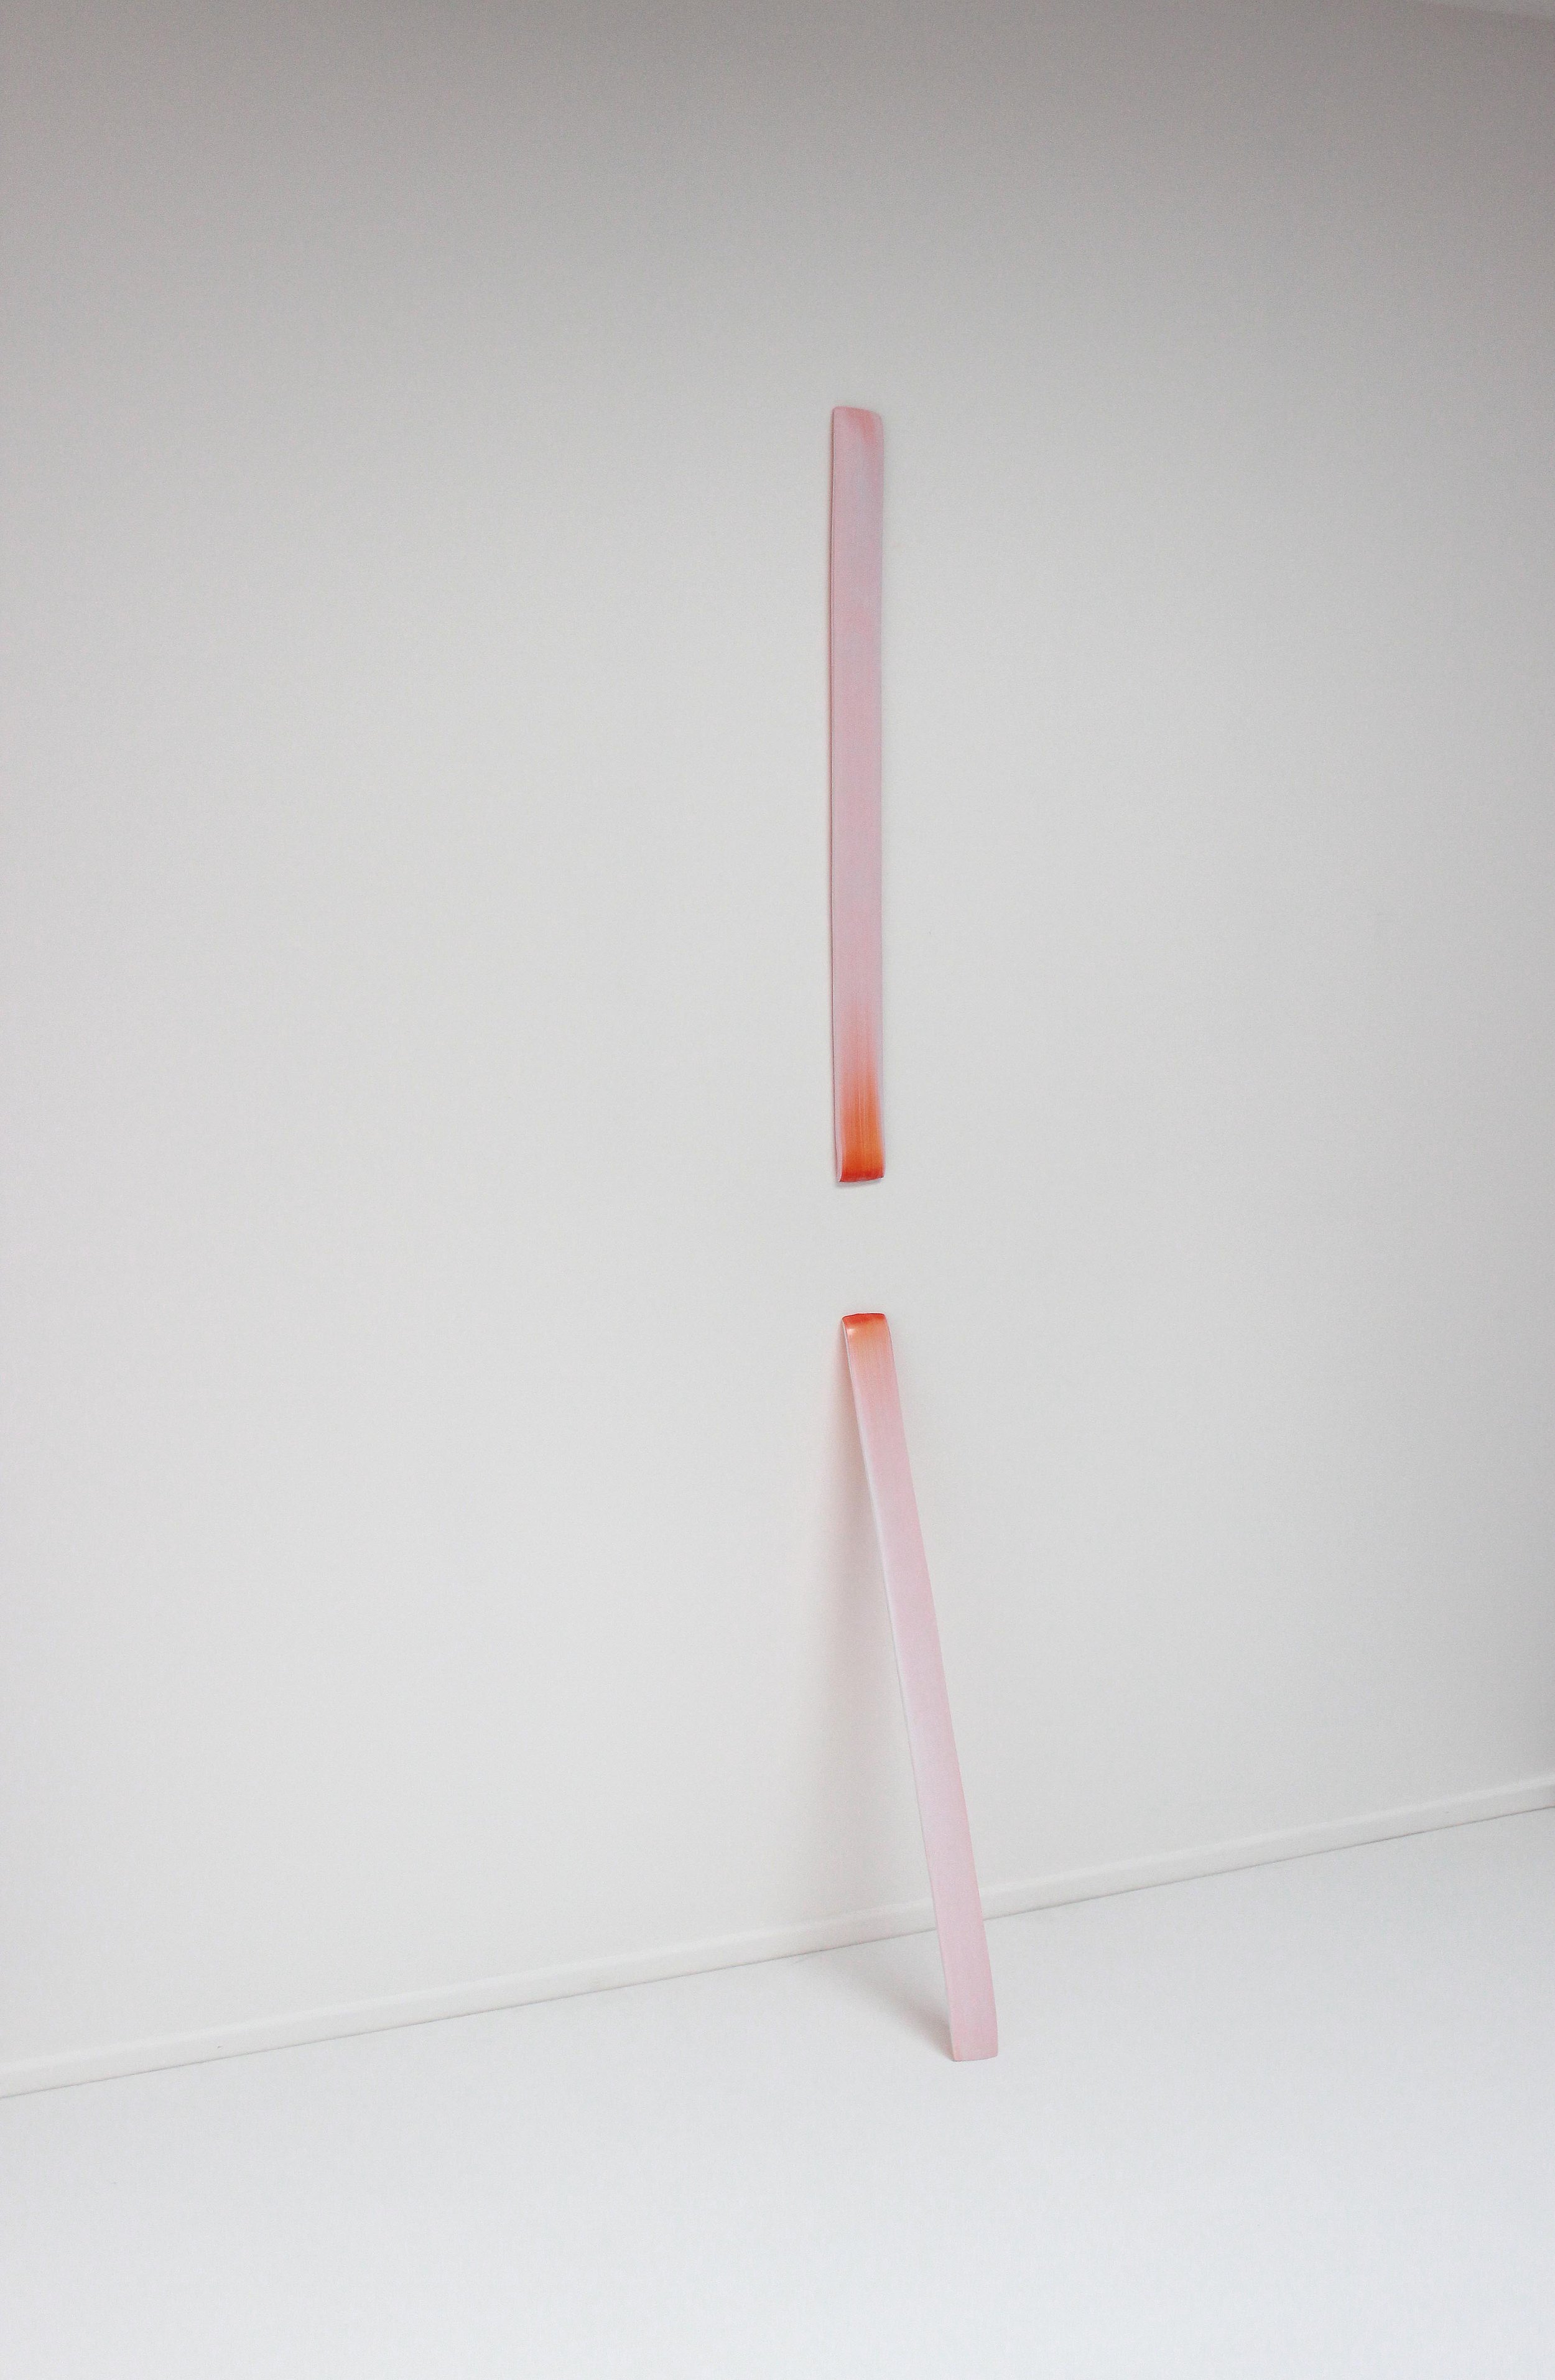 8.M.B. O’Toole, painting installation, Studio 8, 2014.JPG